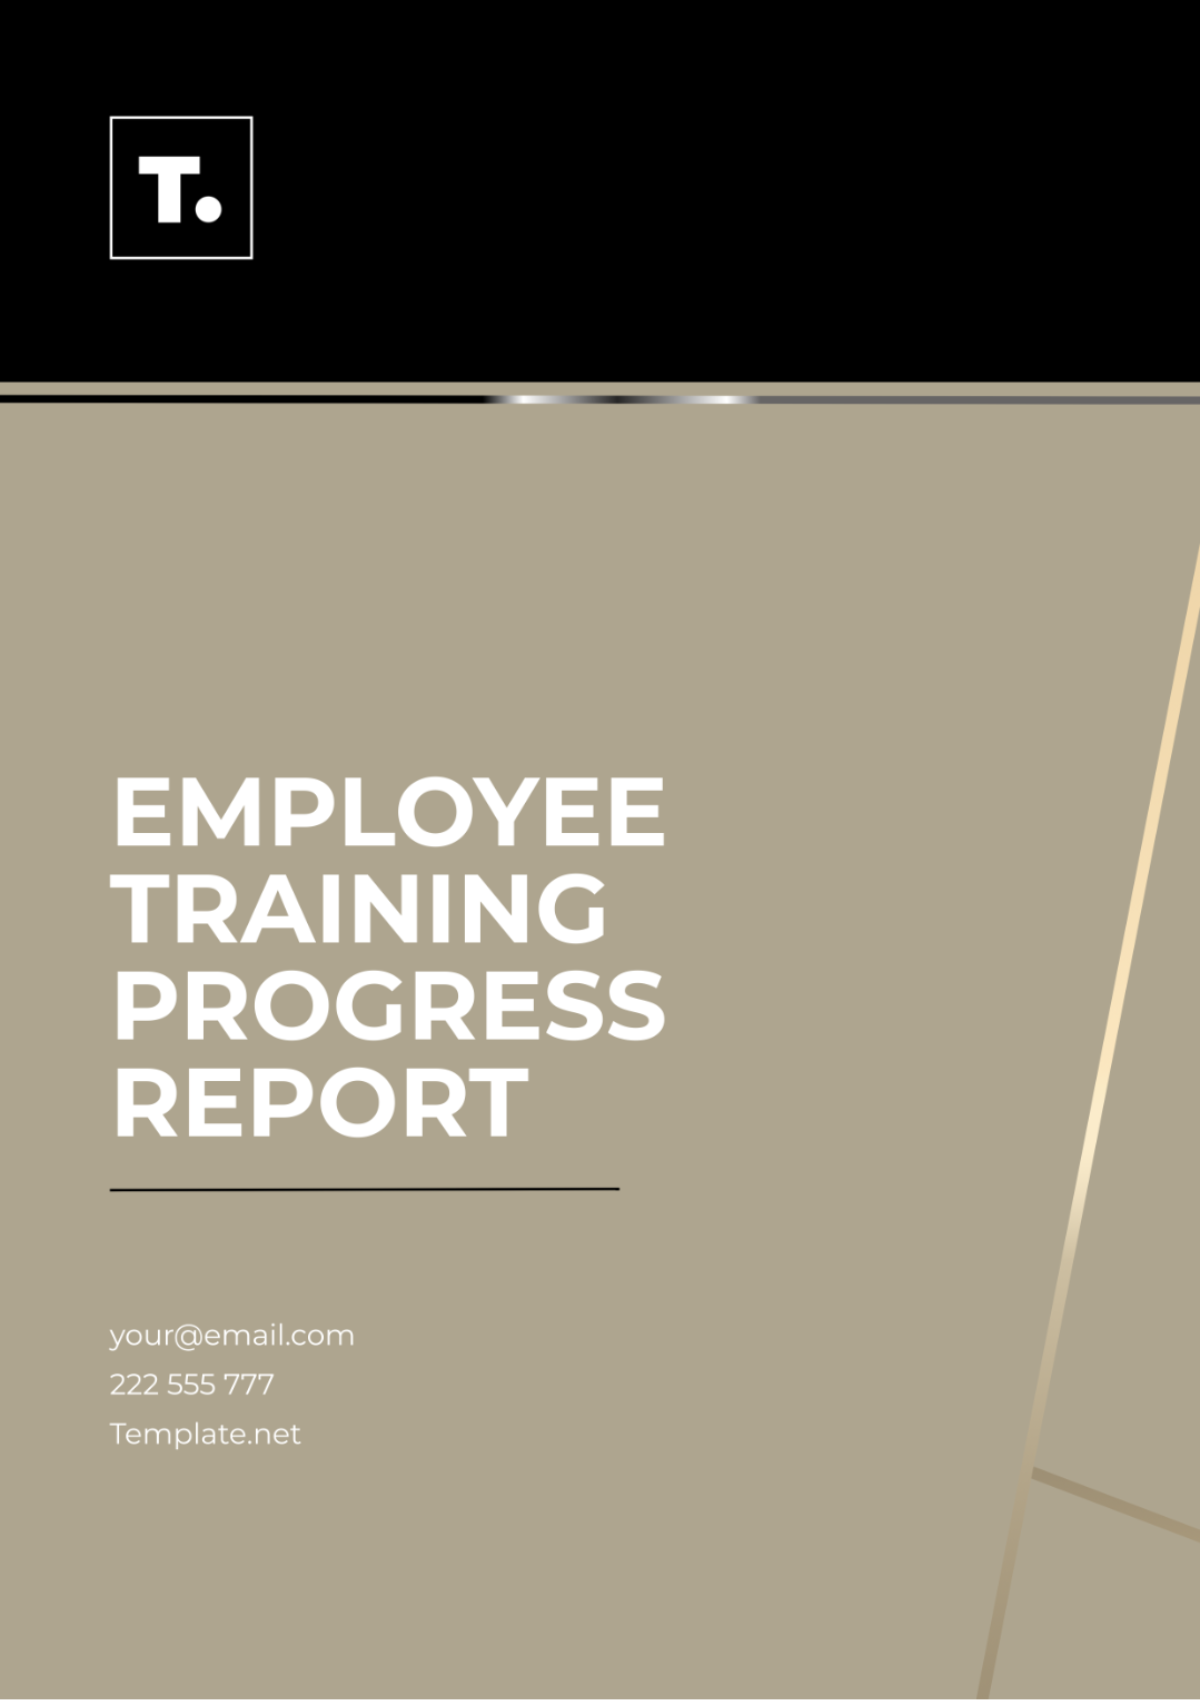 Employee Training Progress Report Template